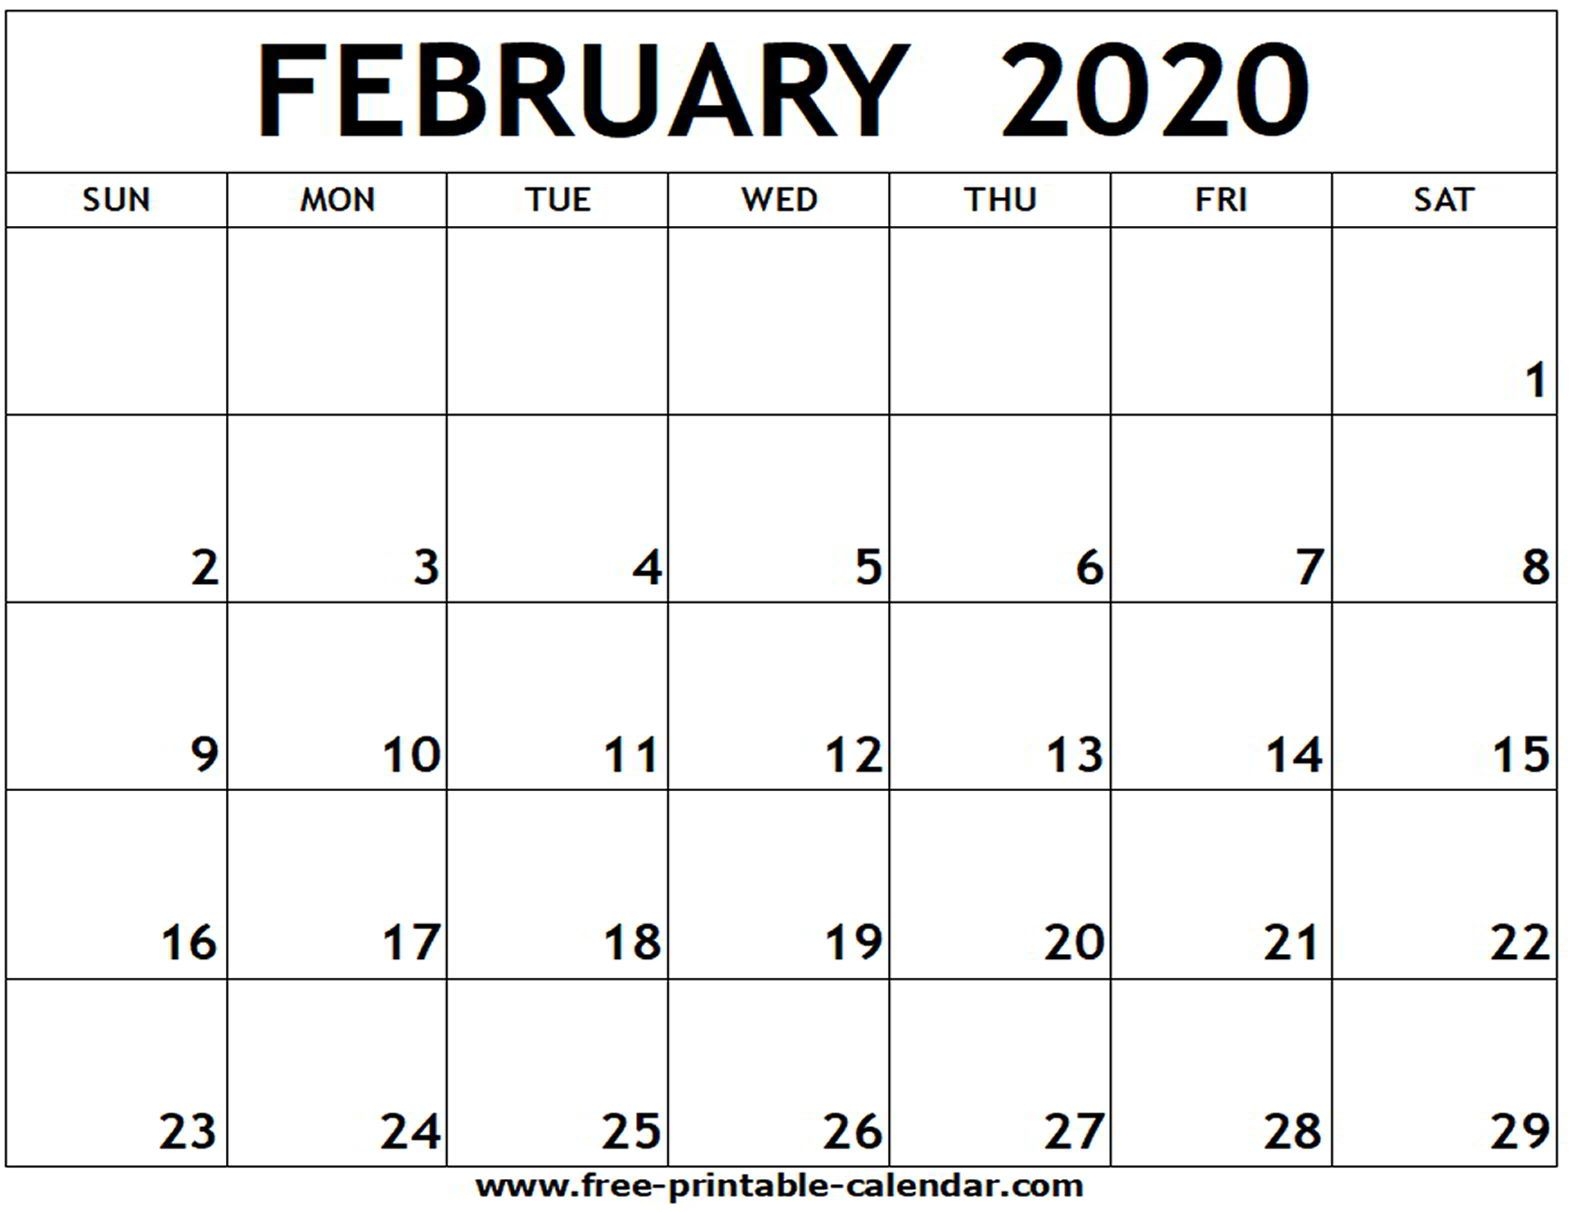 February 2020 Printable Calendar - Free-Printable-Calendar